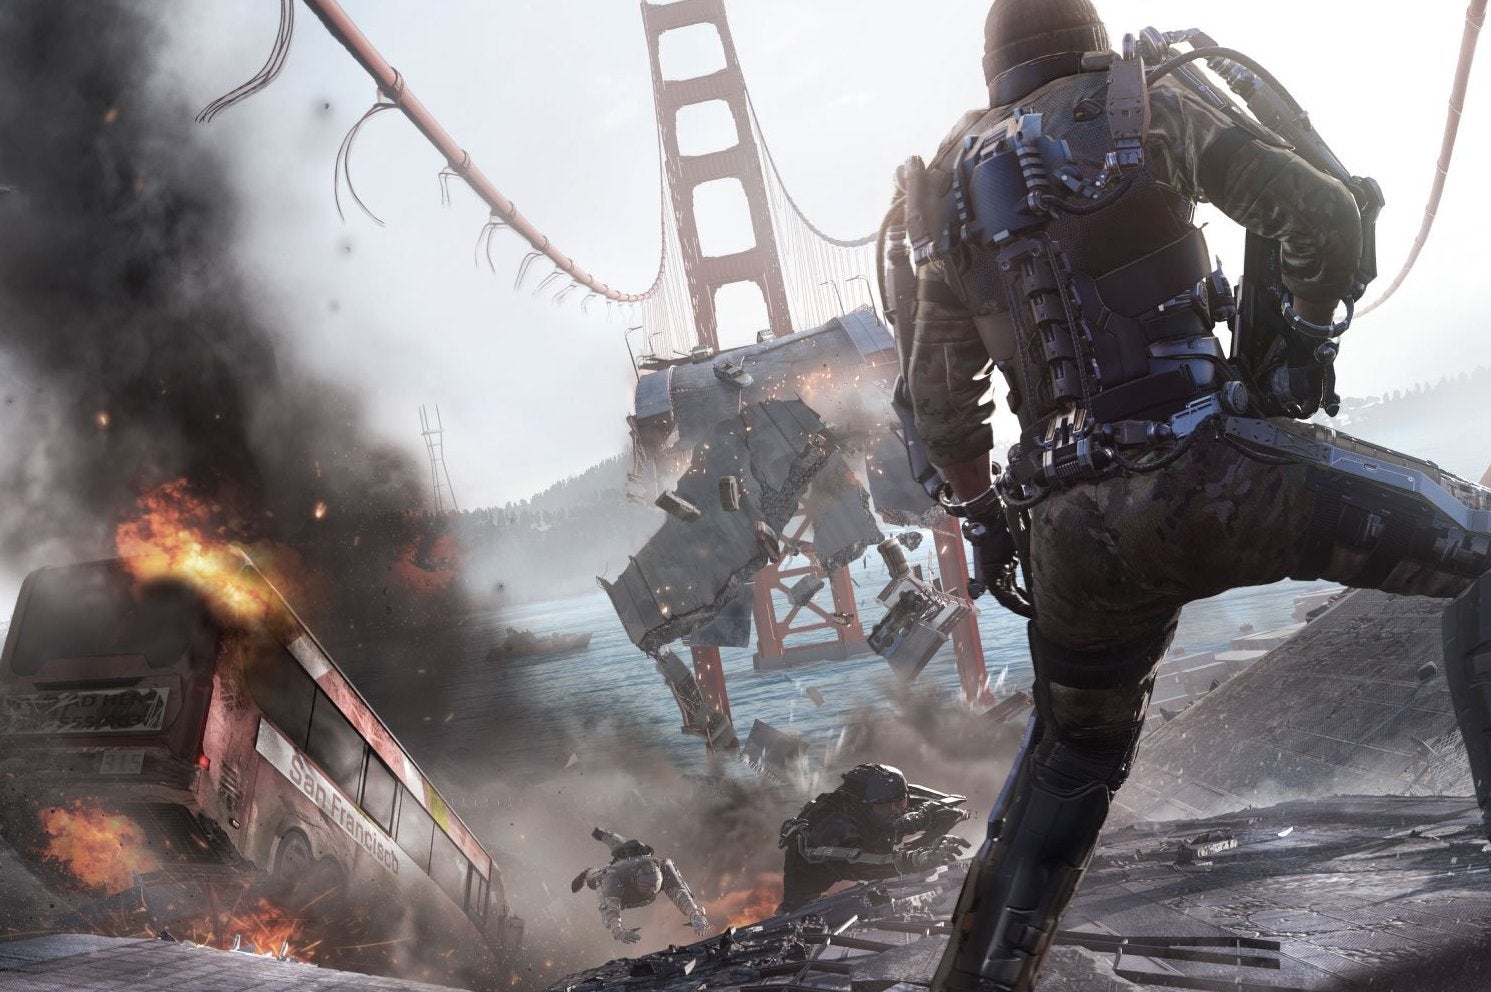 Bilder zu Die Prise Dead Space in Call of Duty: Advanced Warfare